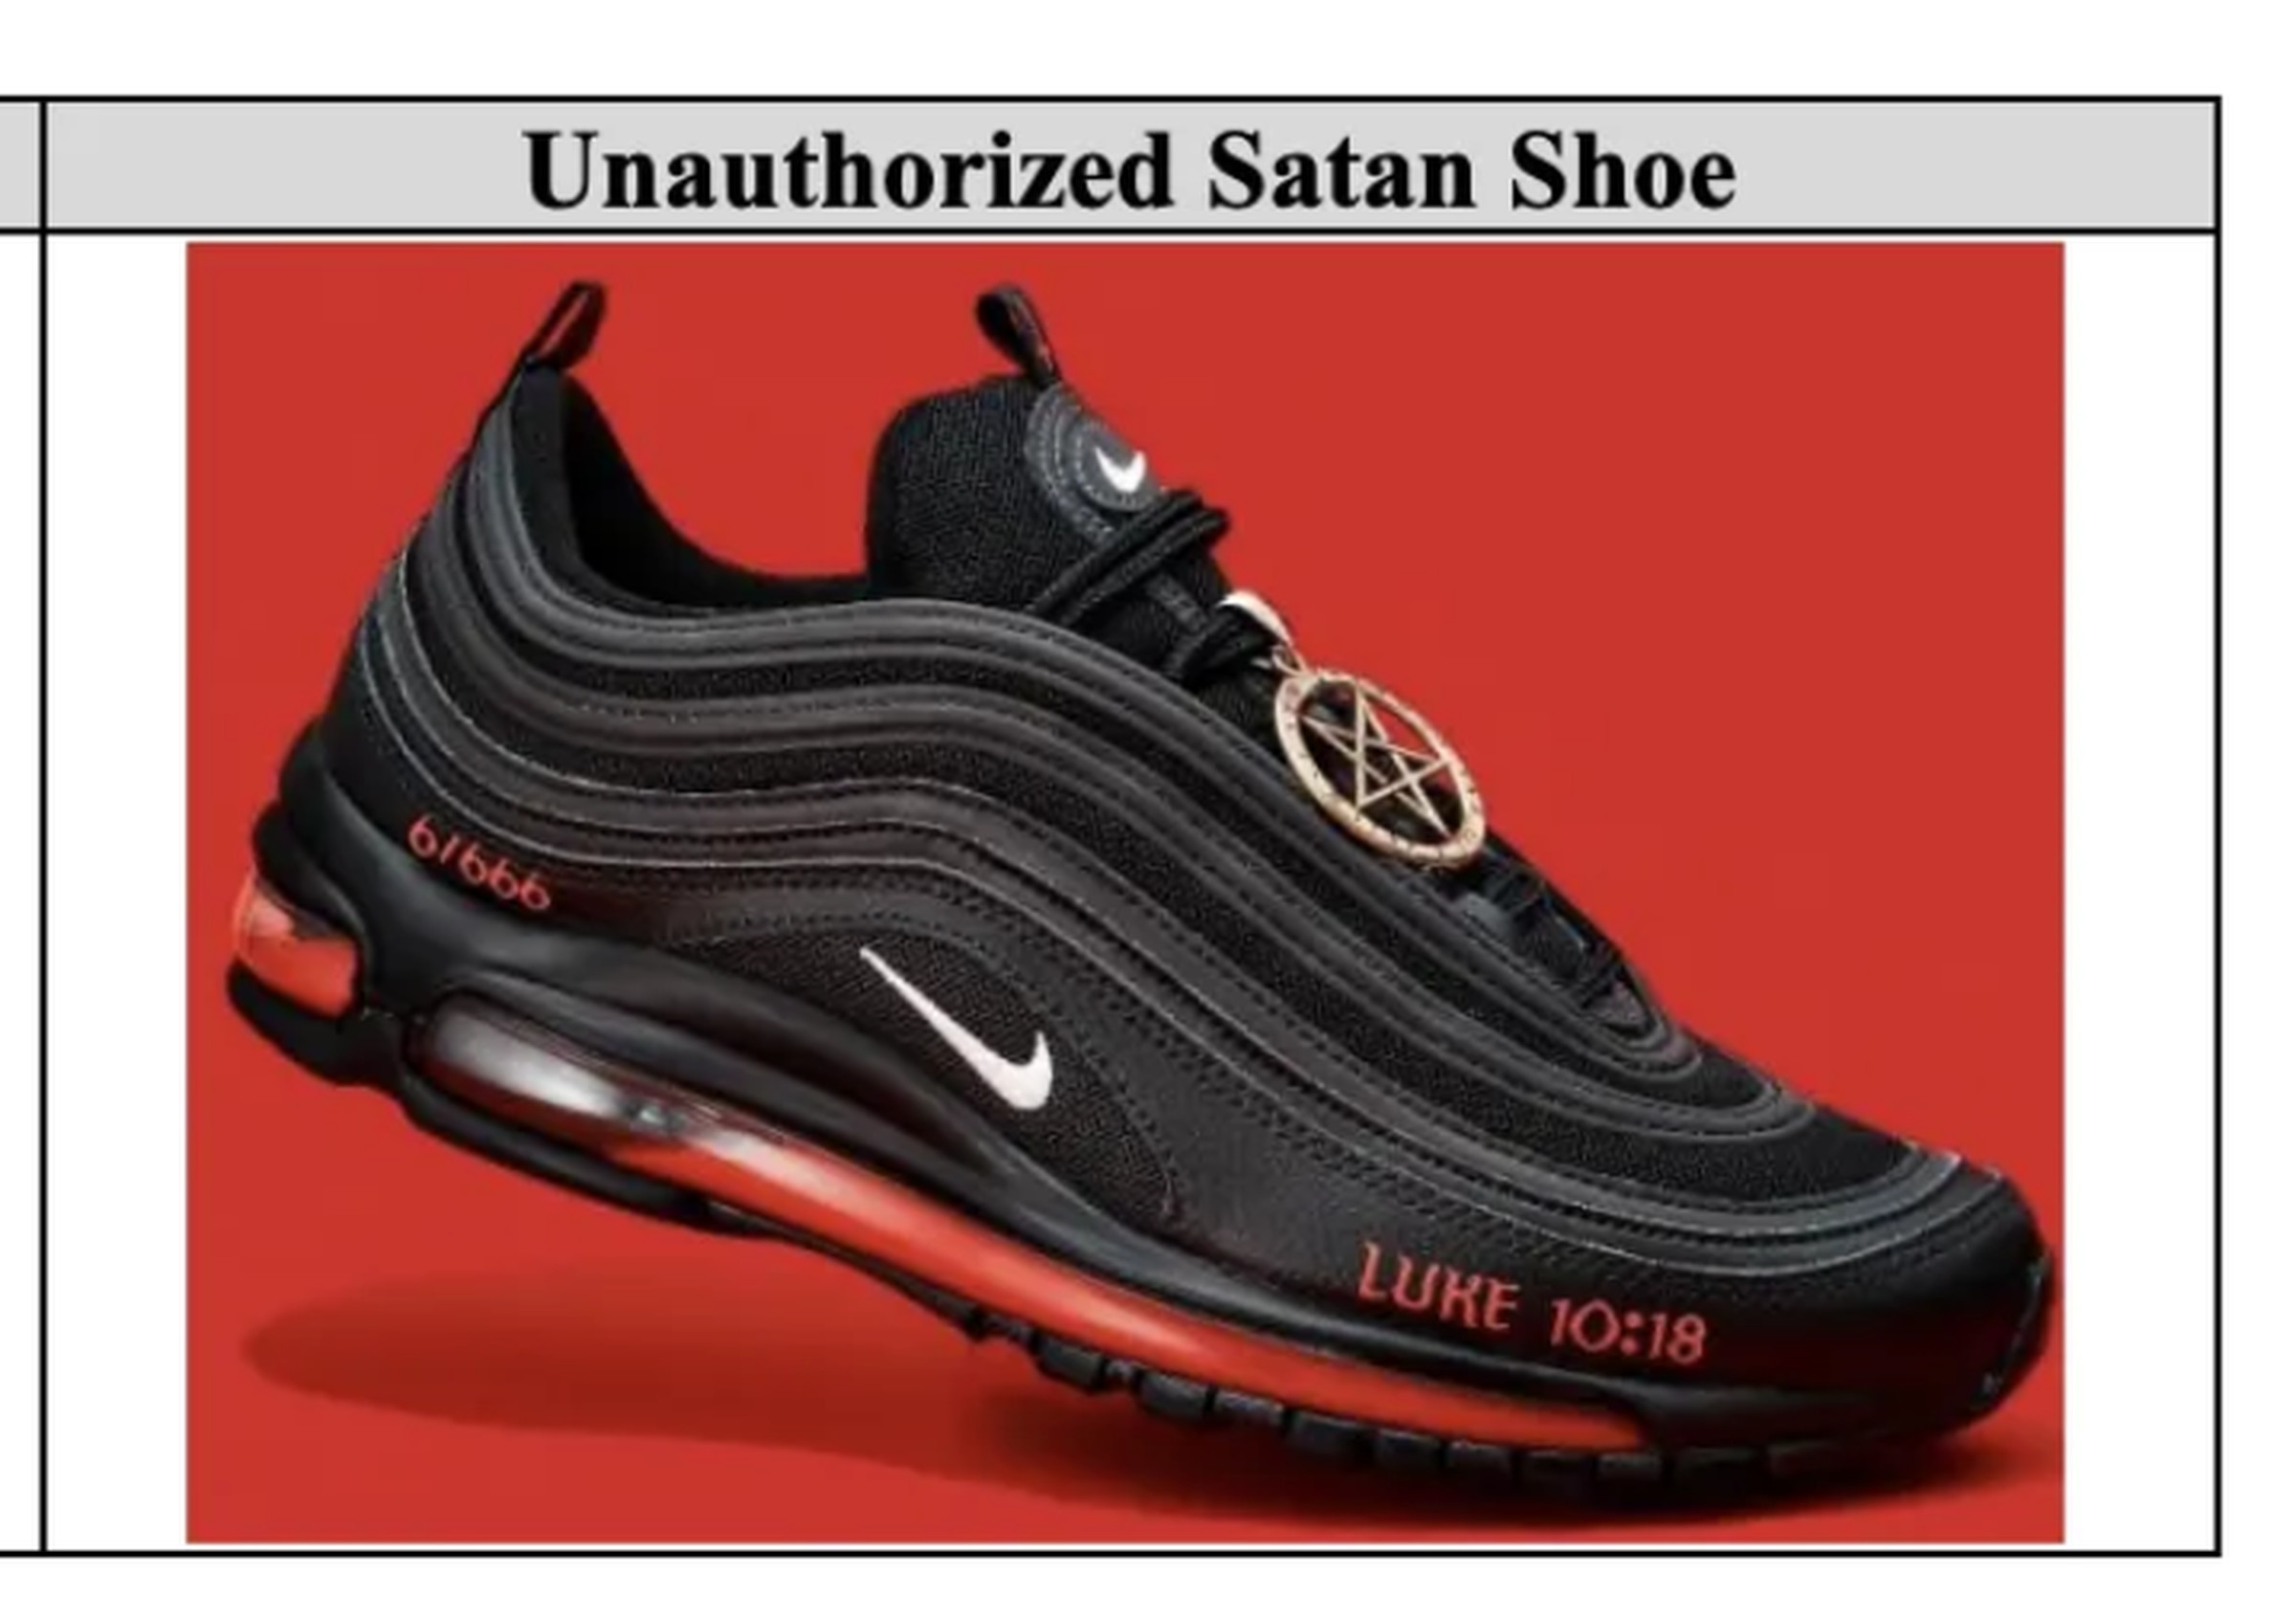 “Unauthorized Satan Shoe” exhibit, Nike lawsuit